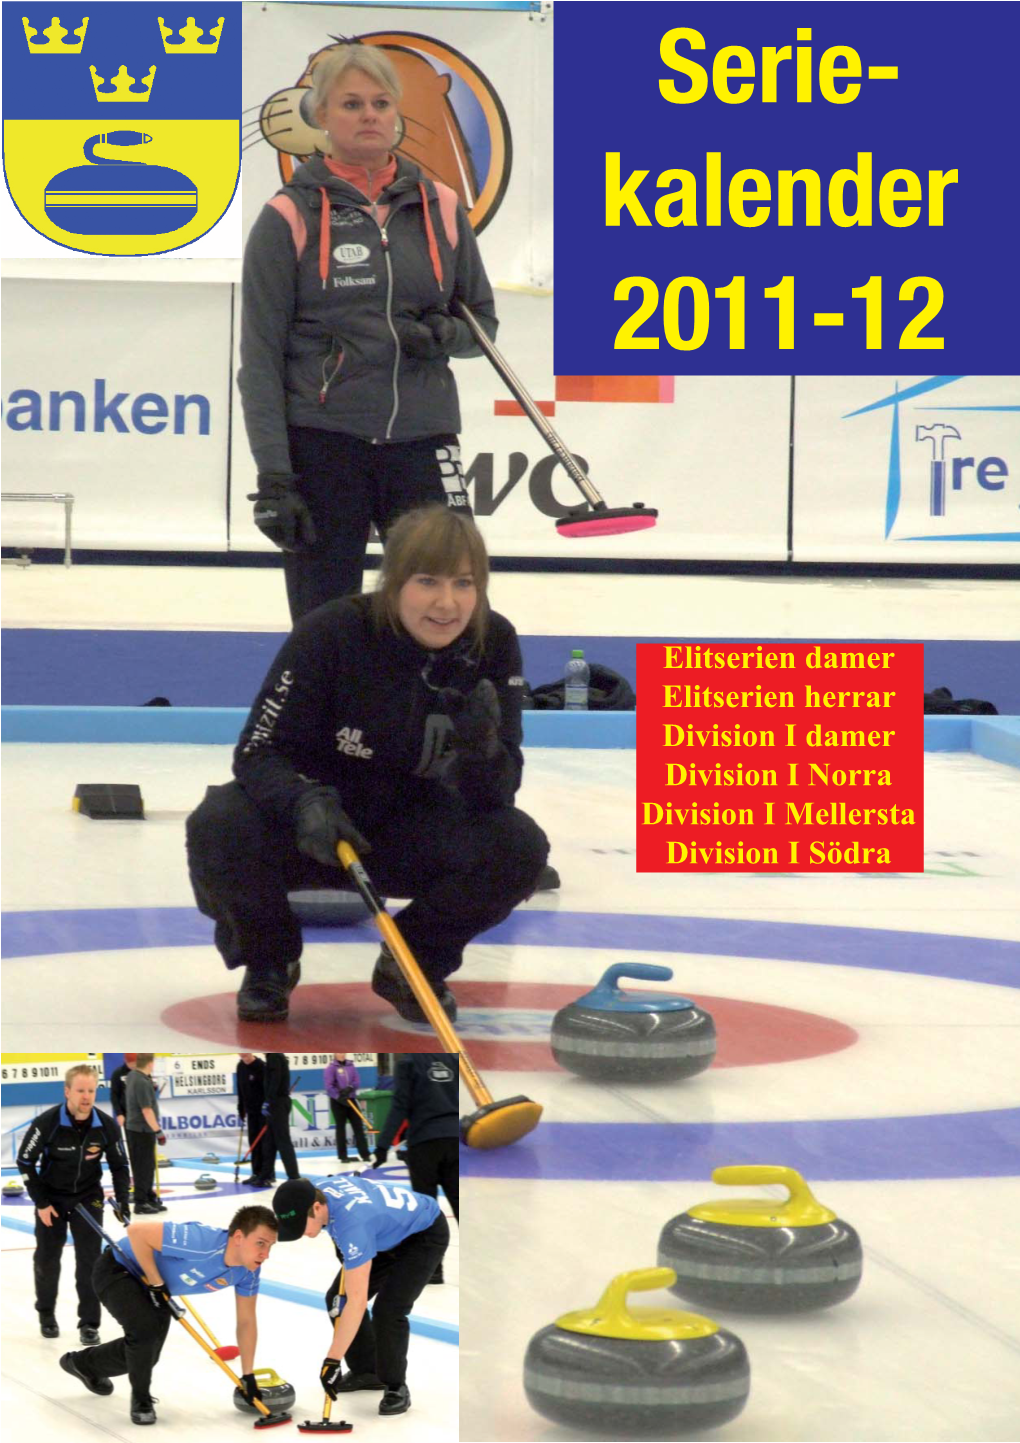 Seriekalender 2011-12.Indd